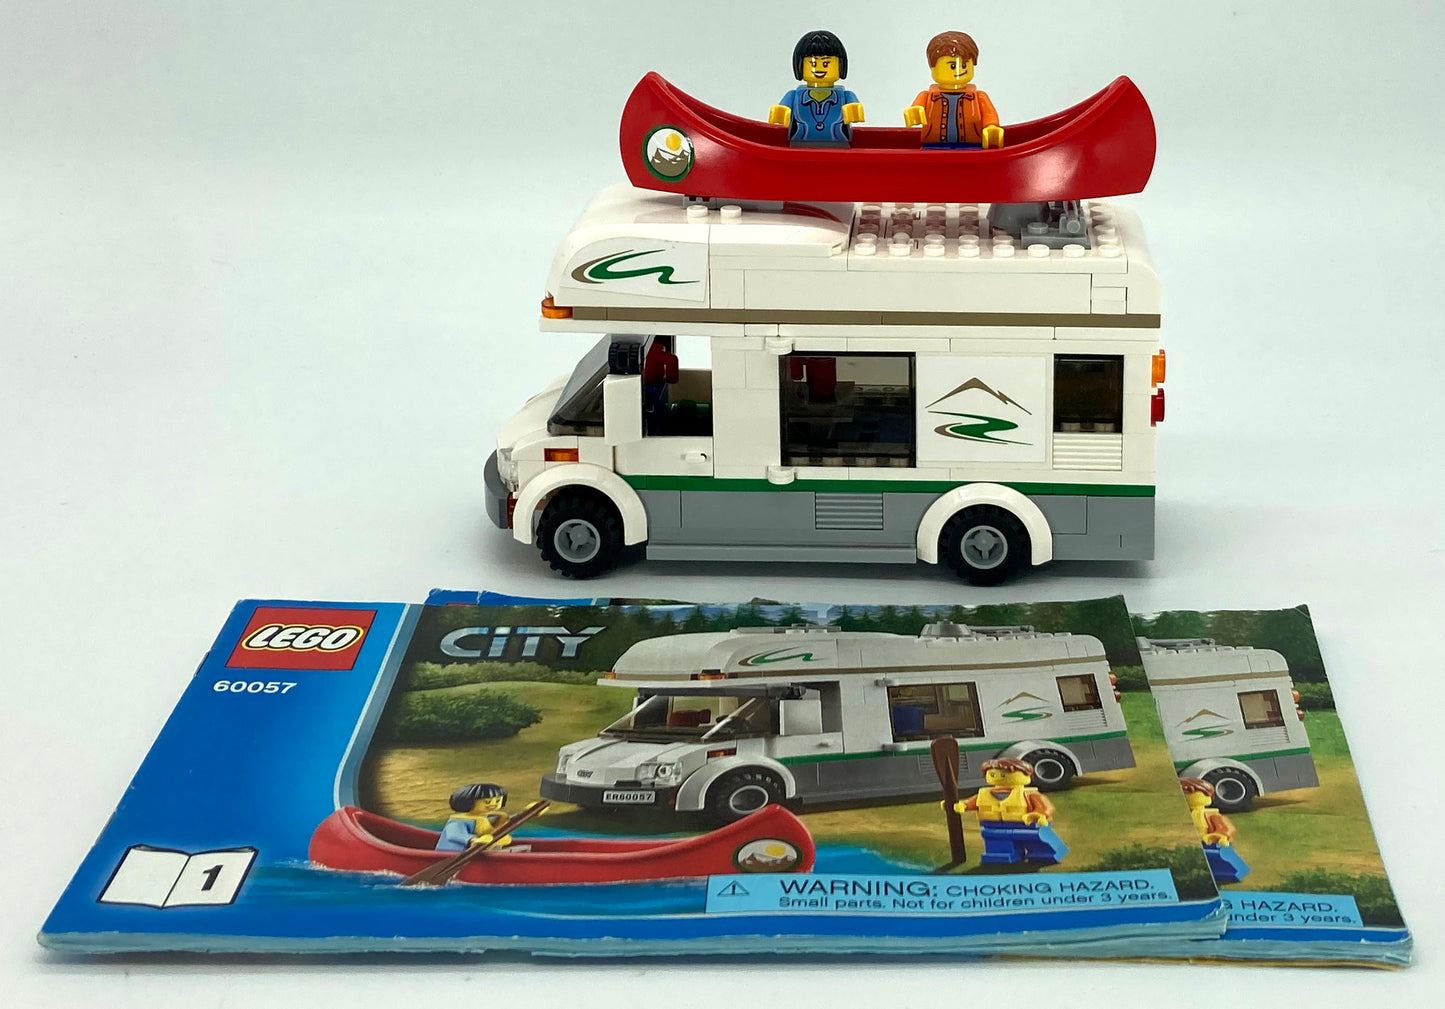 Used Set 60057 Camper Van (with Instruction Manuals, No Box)